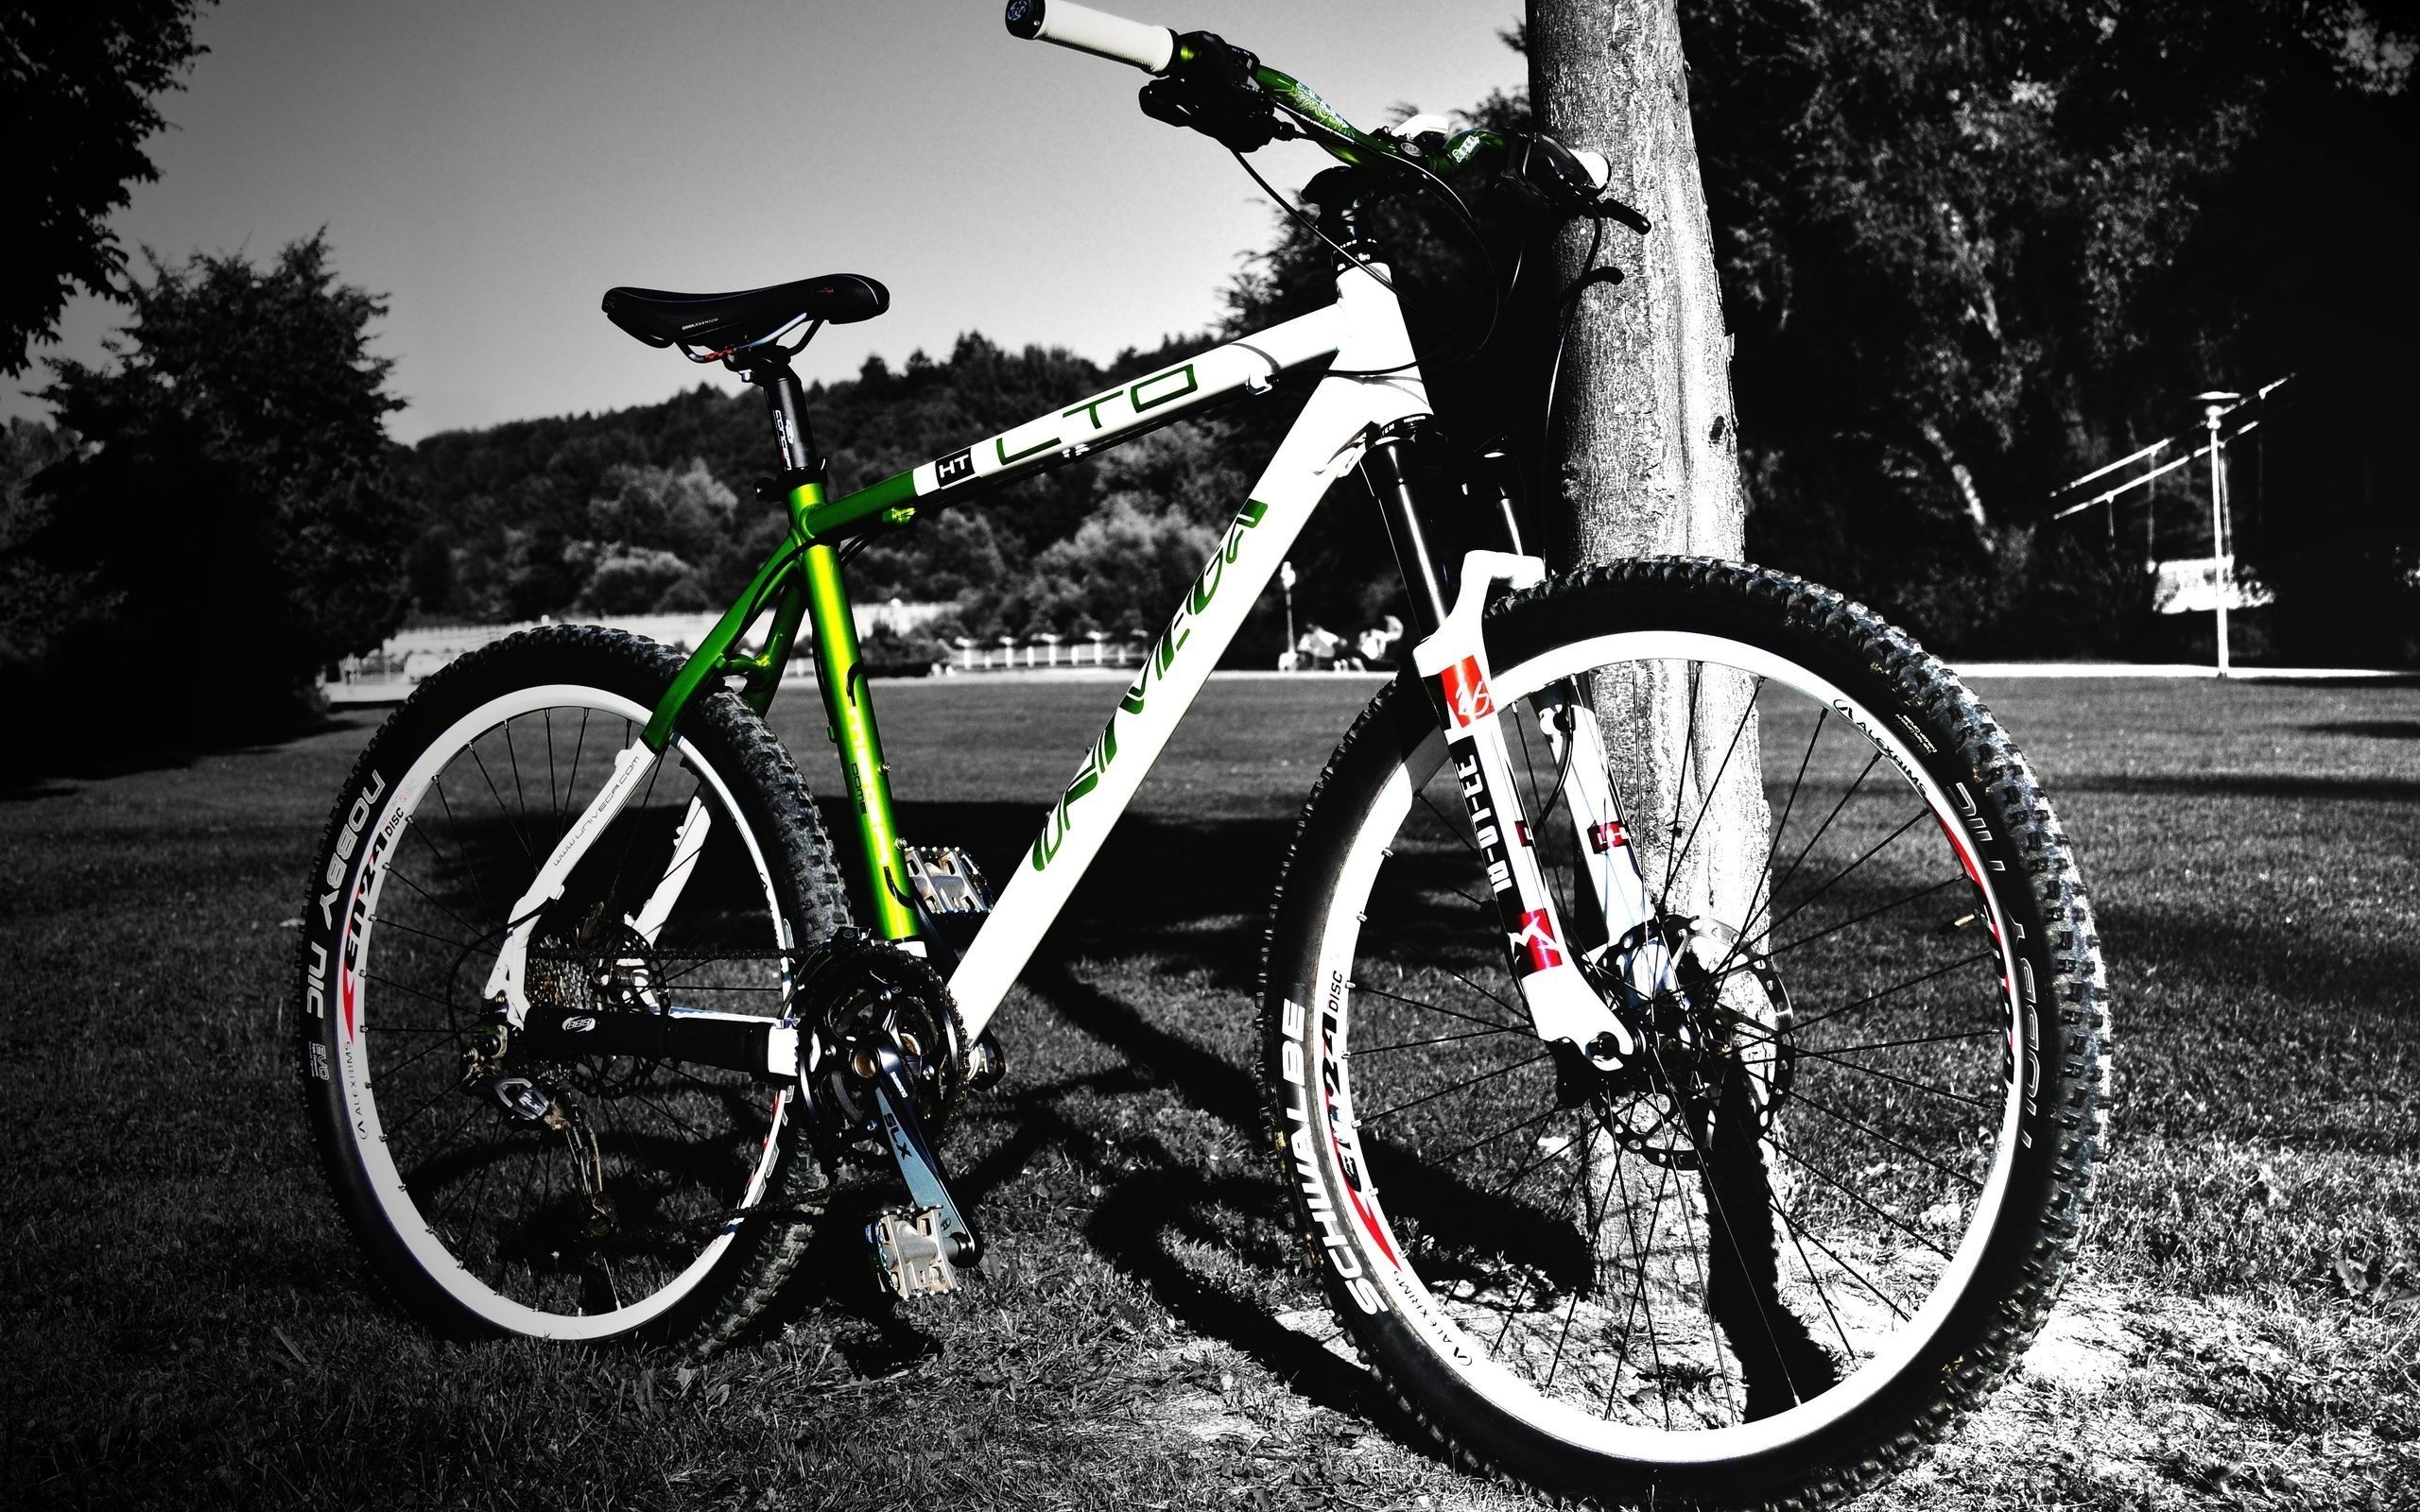 bisiklet 바탕 화면,육상 차량,자전거,자전거 바퀴,자전거 프레임,차량